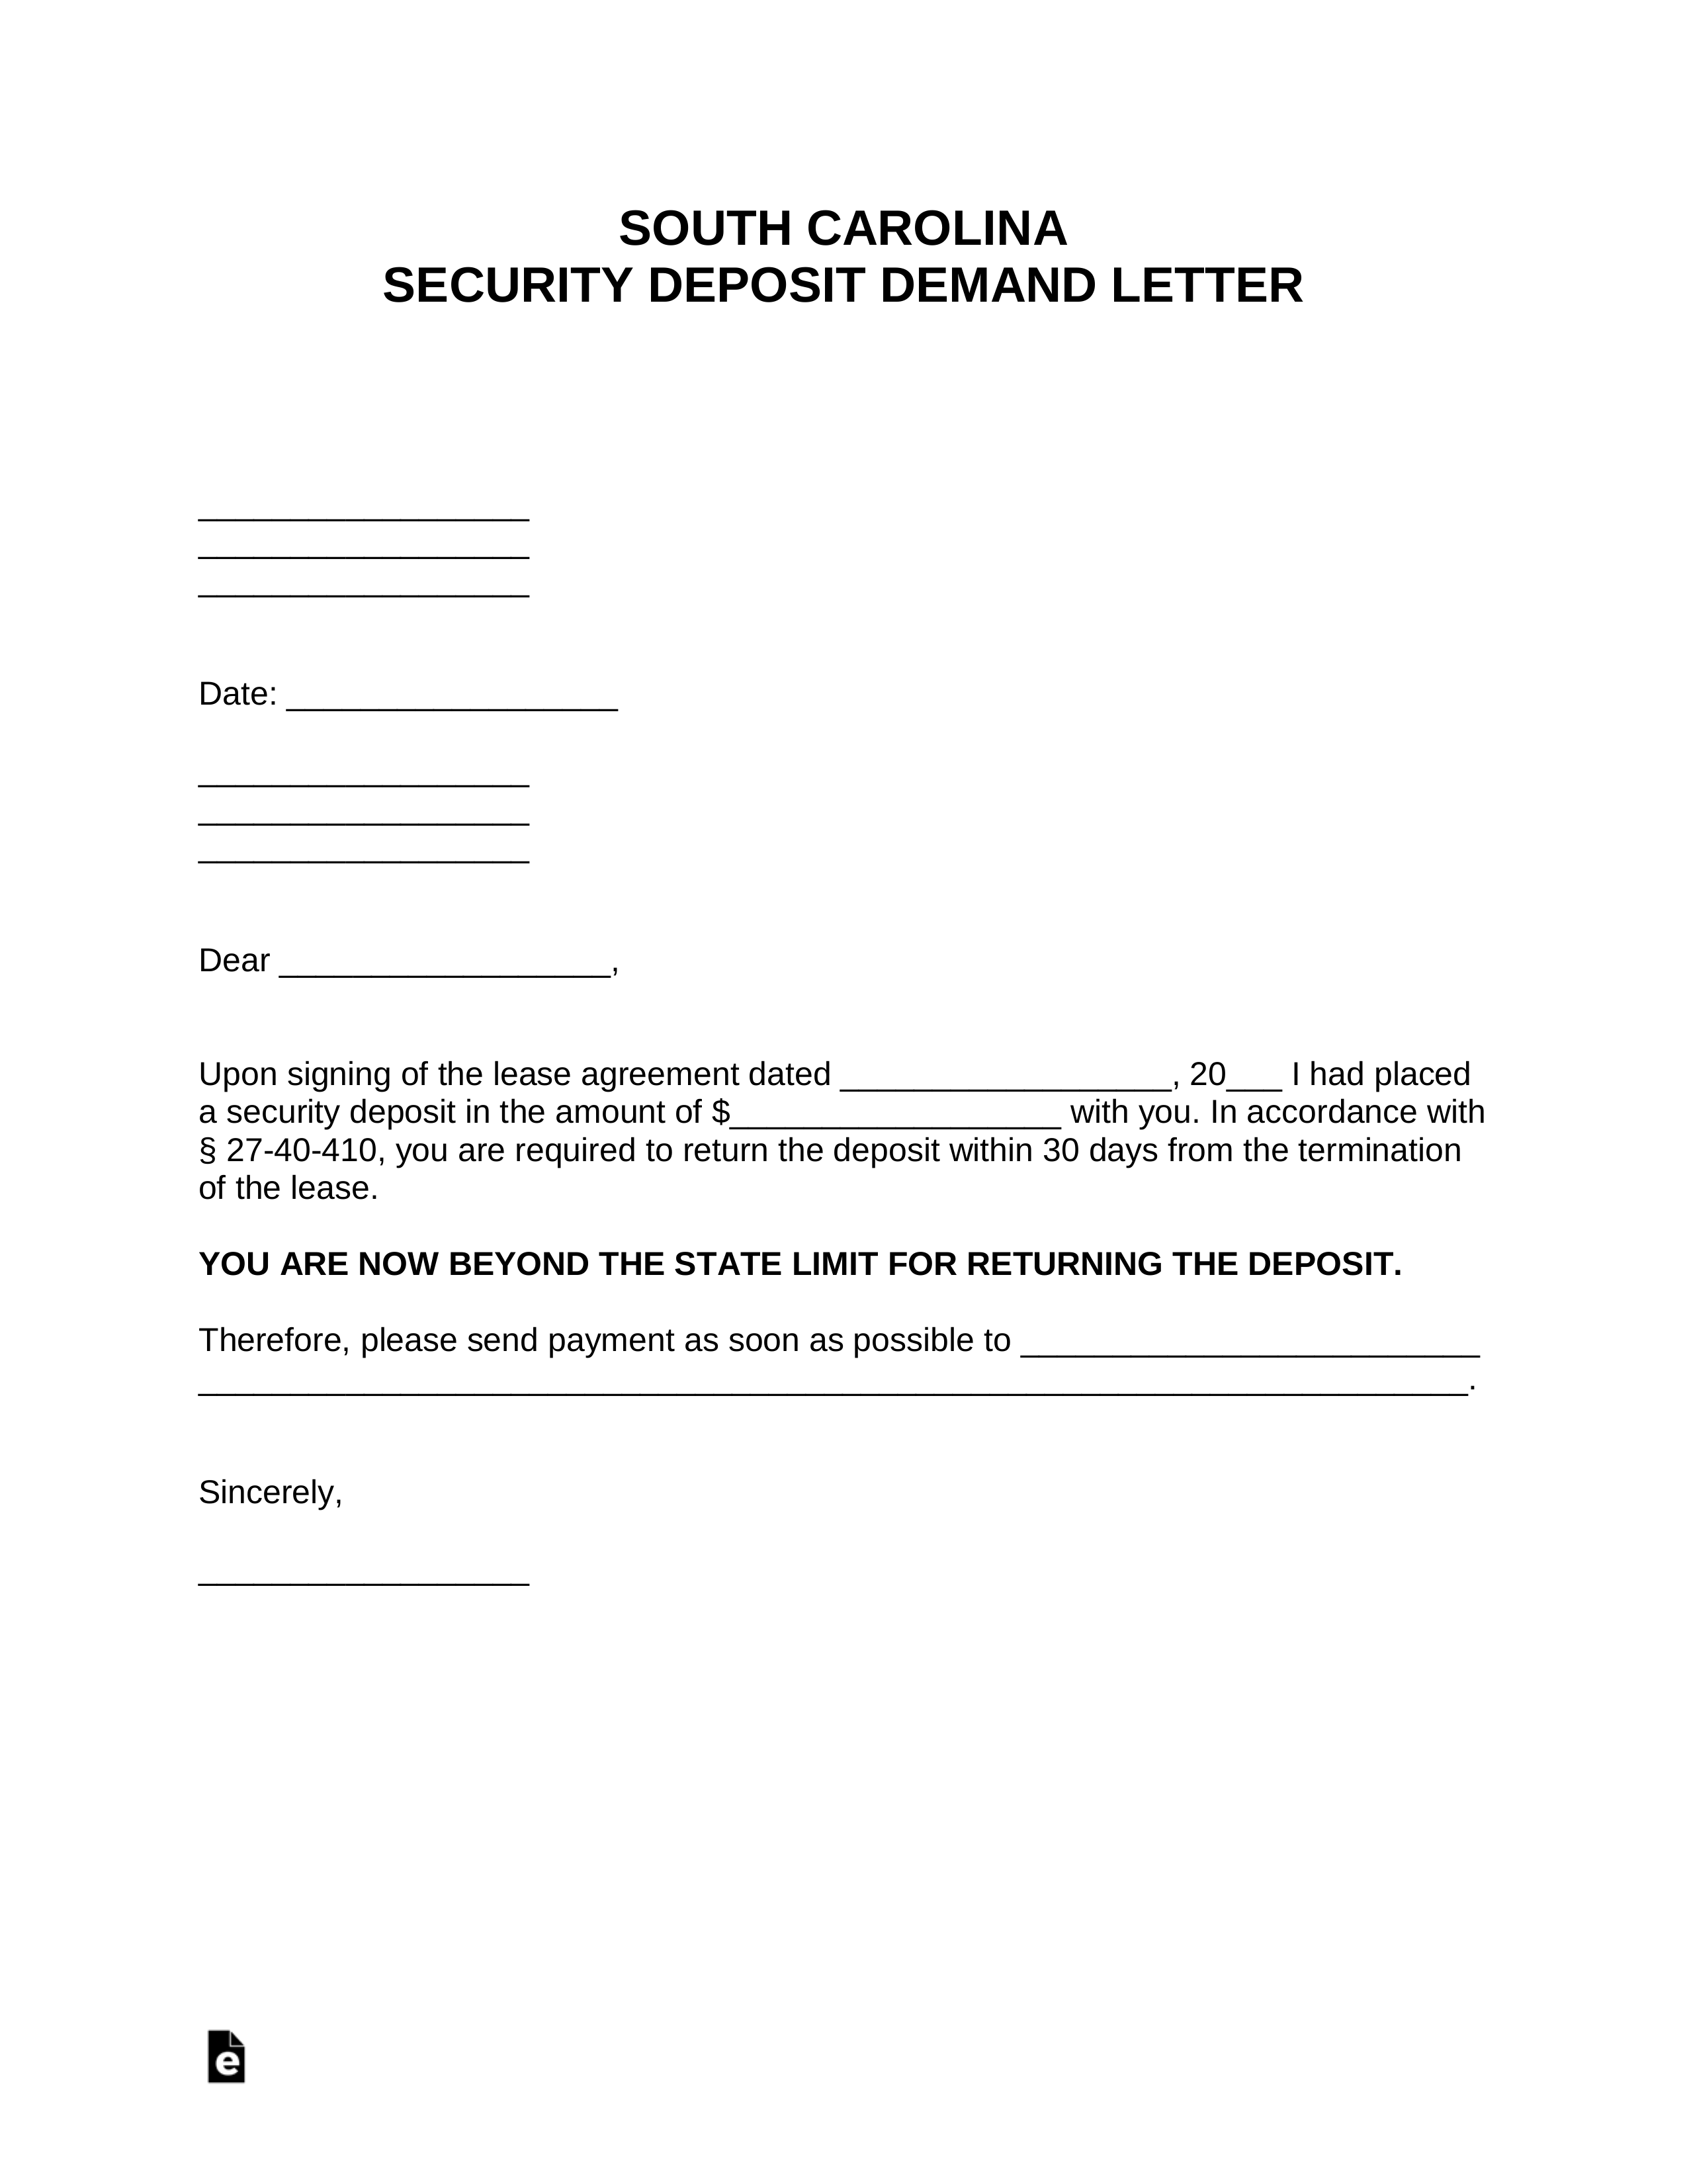 South Carolina Security Deposit Demand Letter